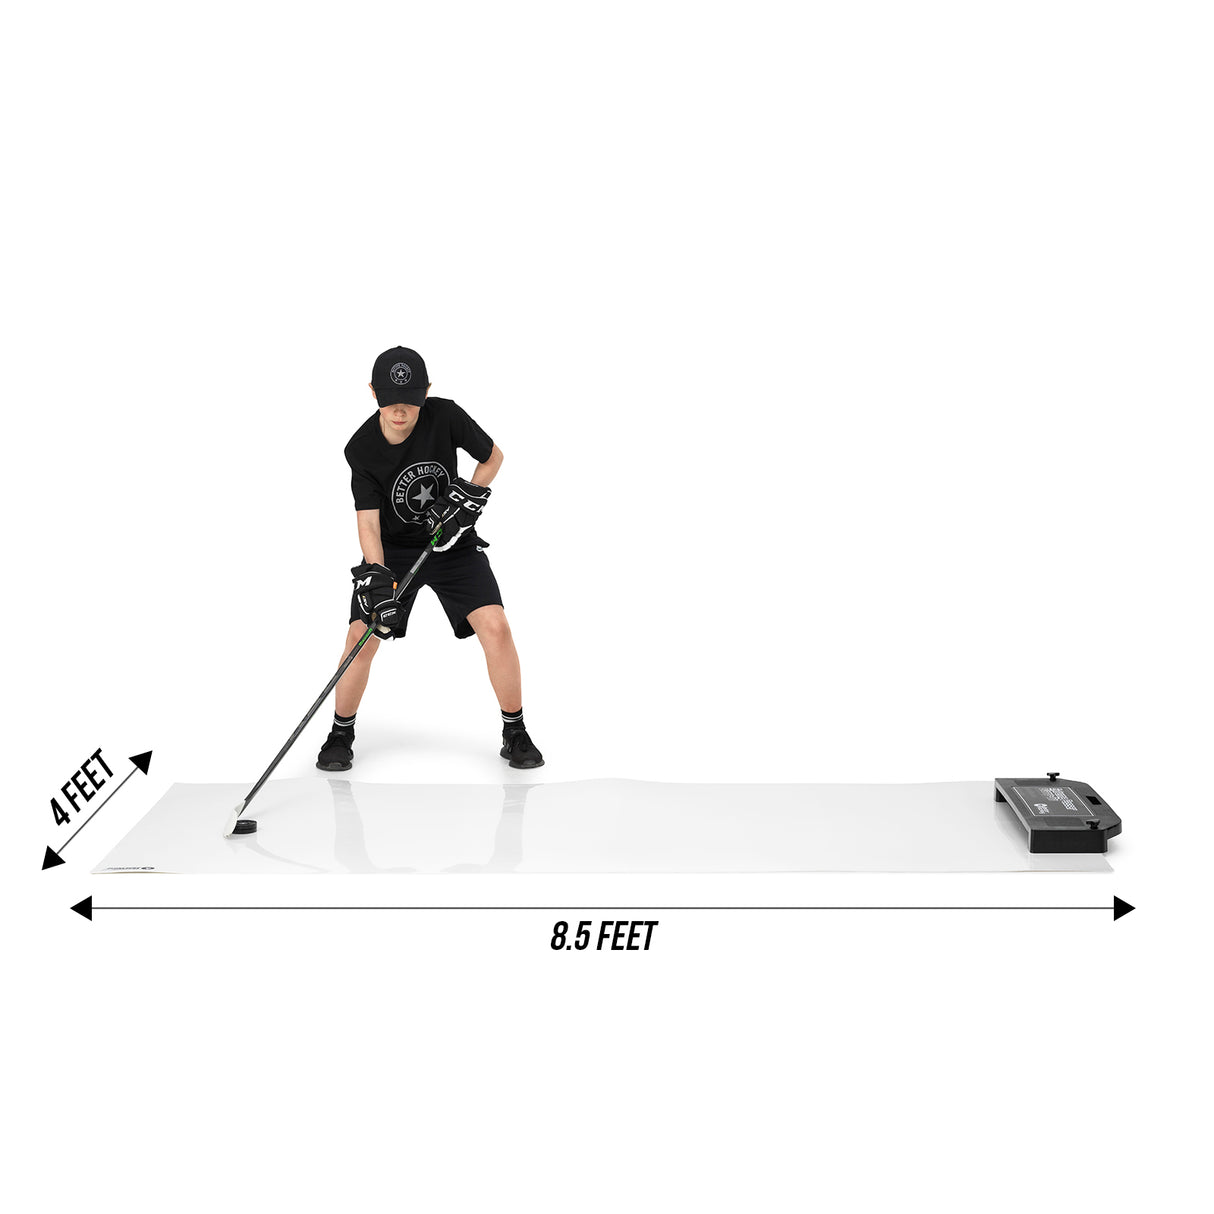 Extreme Hockey Roll-Up Shooting Pad 4x8.5